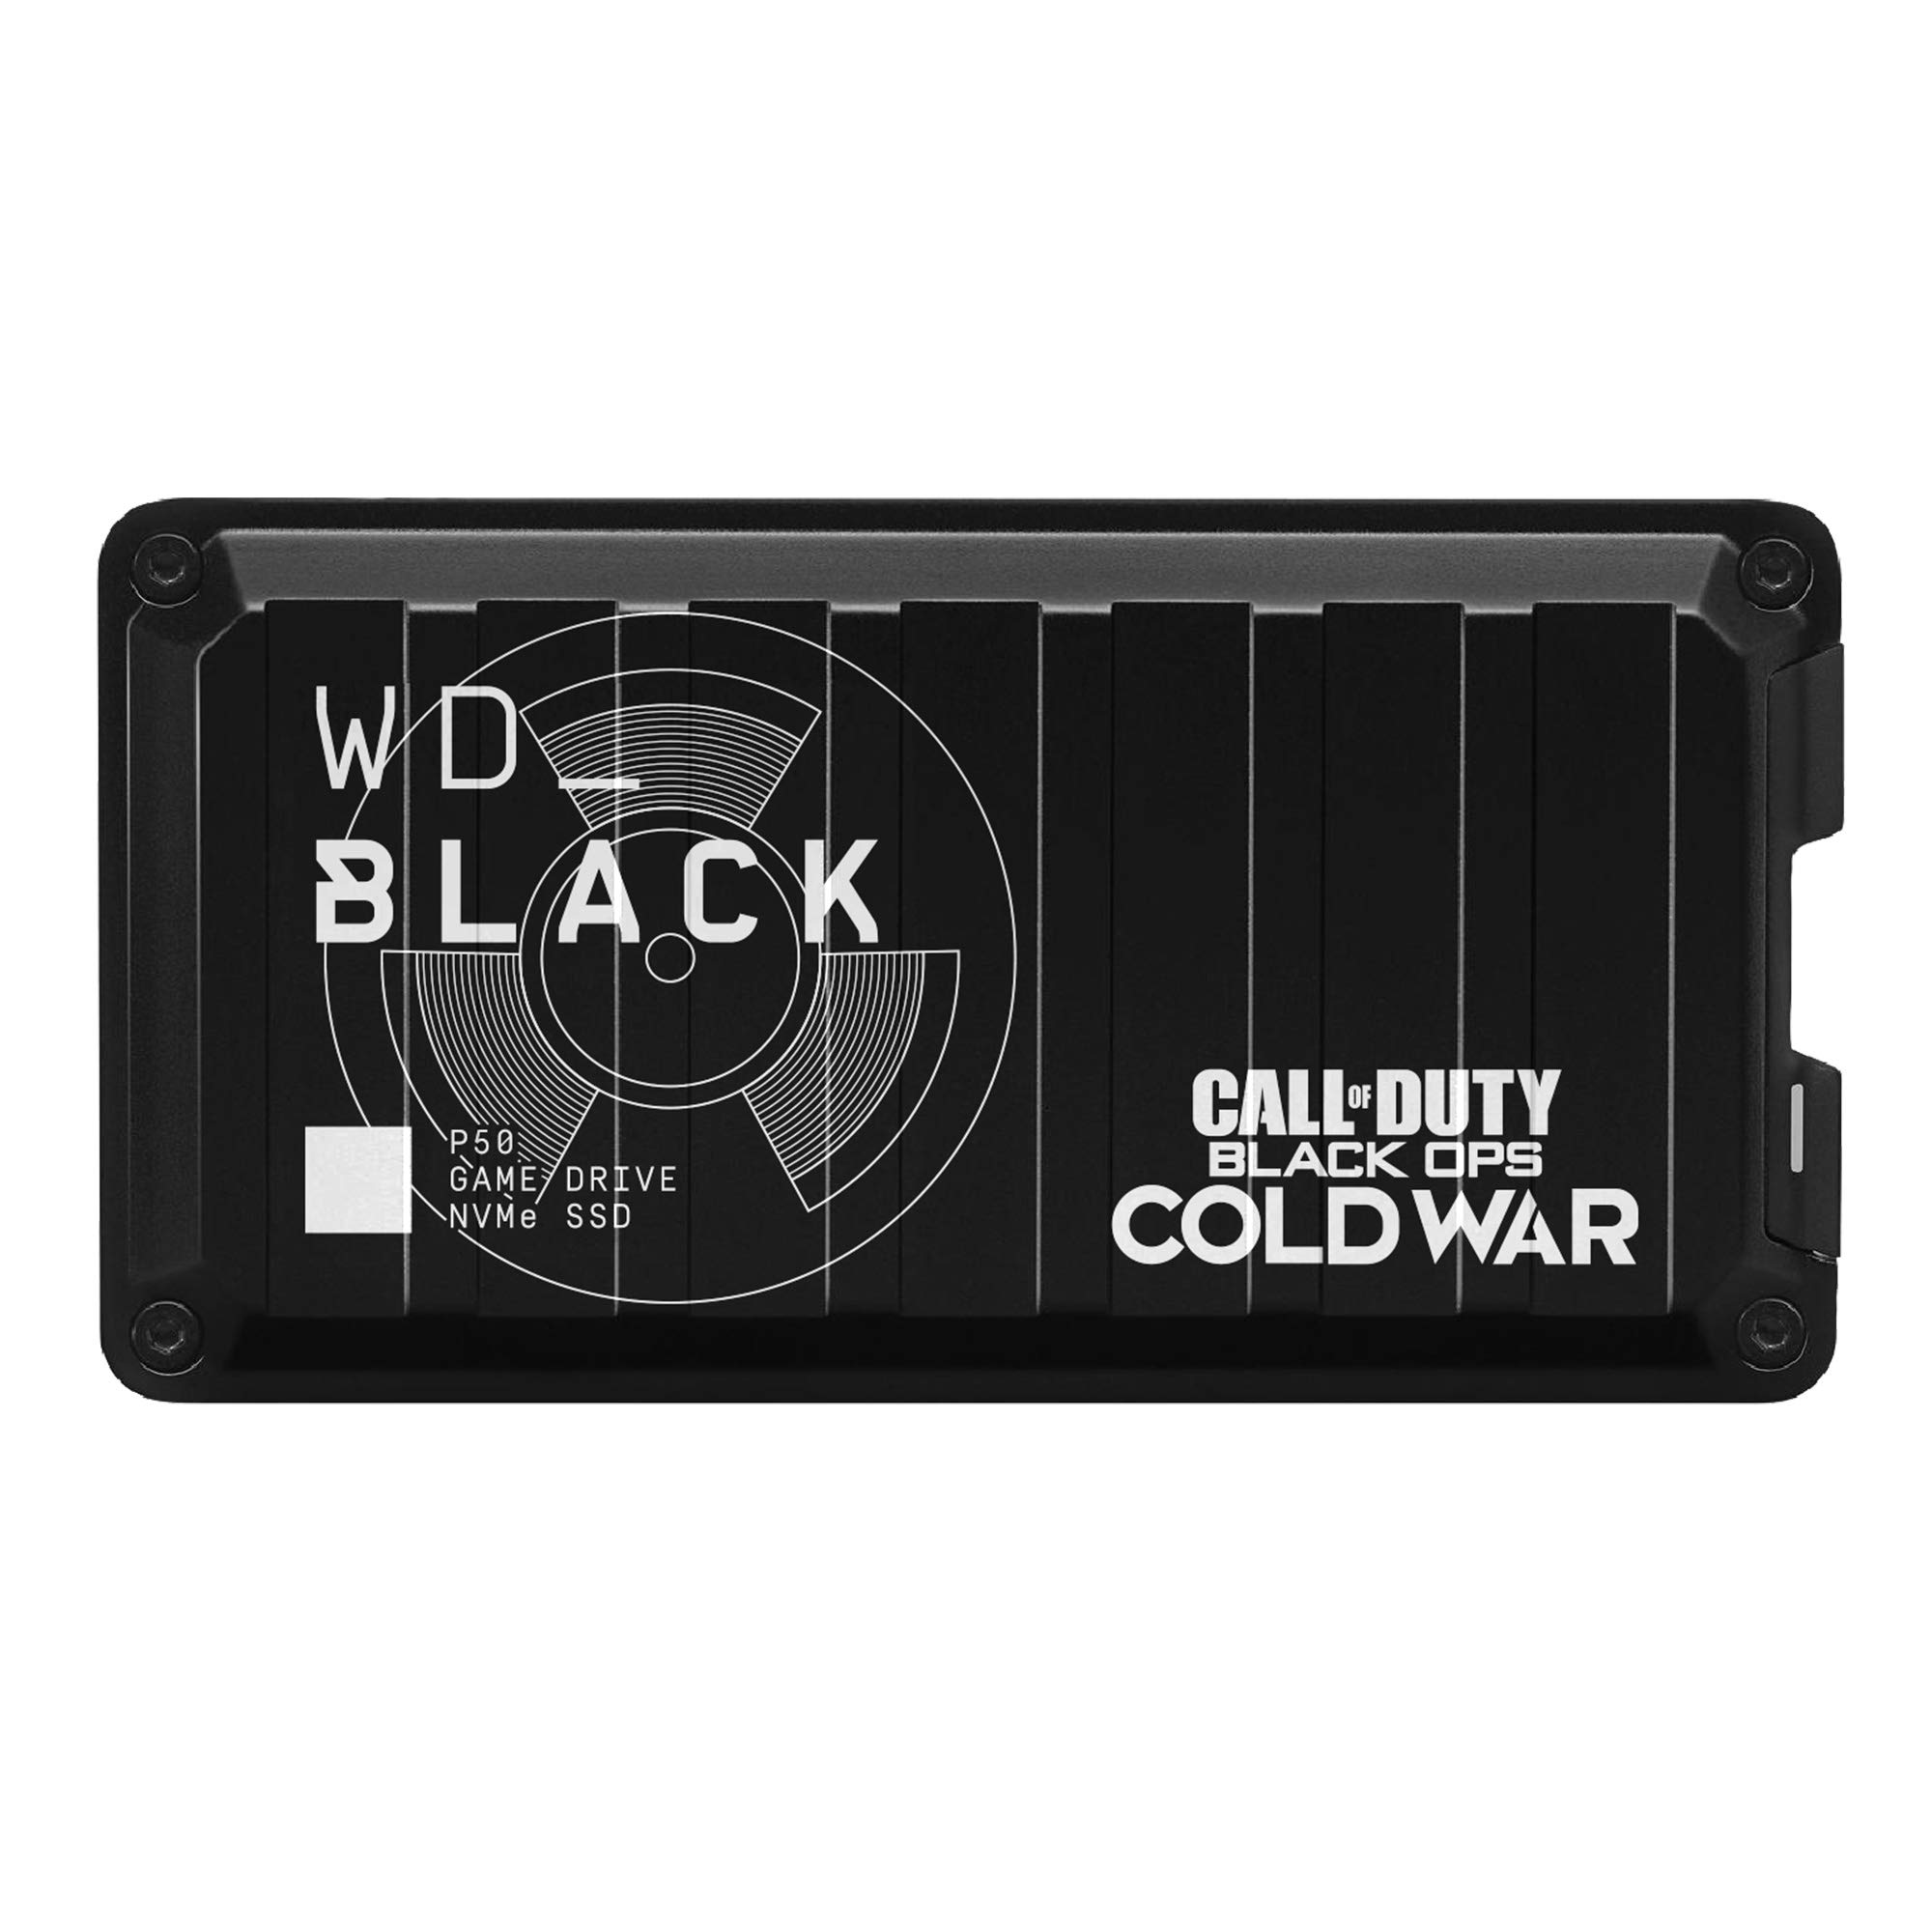 WD BLACK P50 GAME DRIVE SSD 1TB